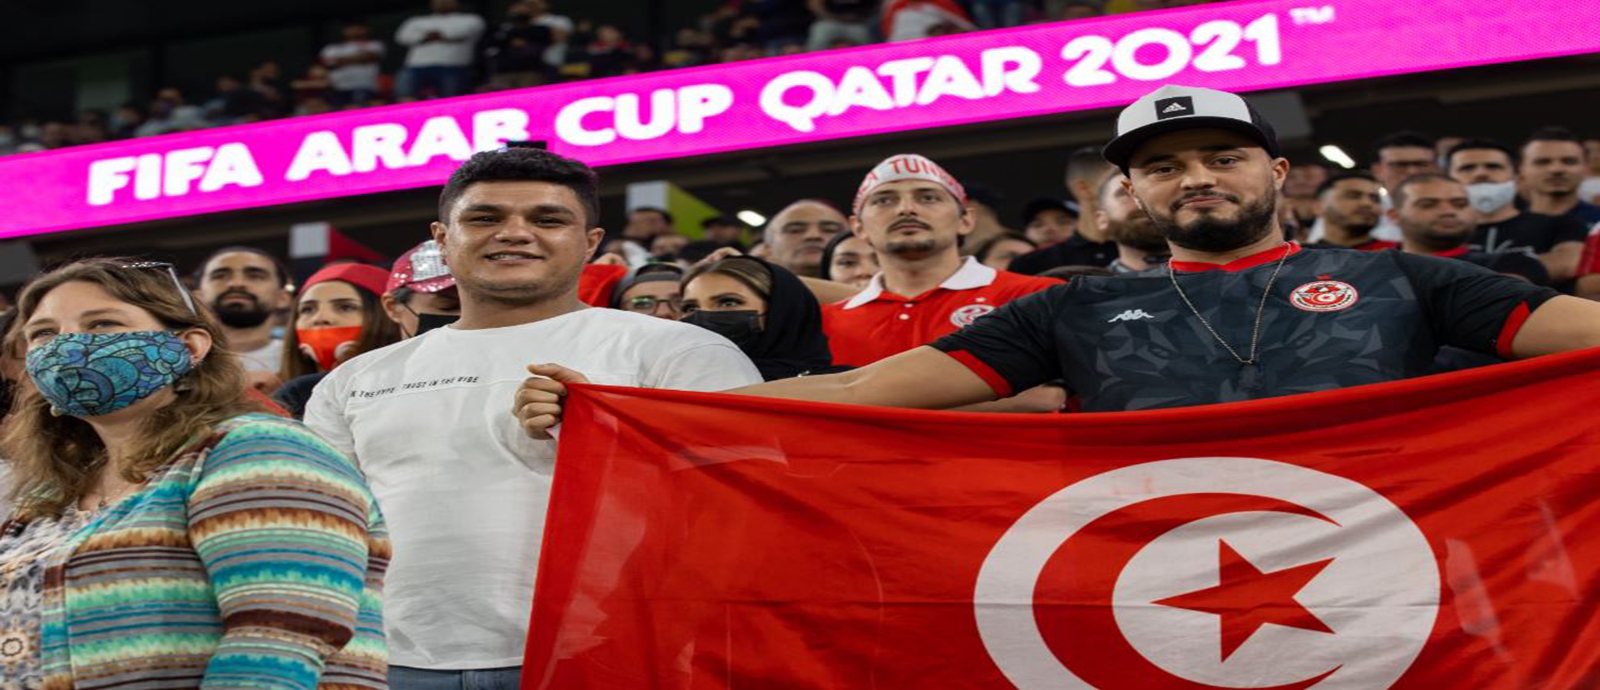 Tunisia fans